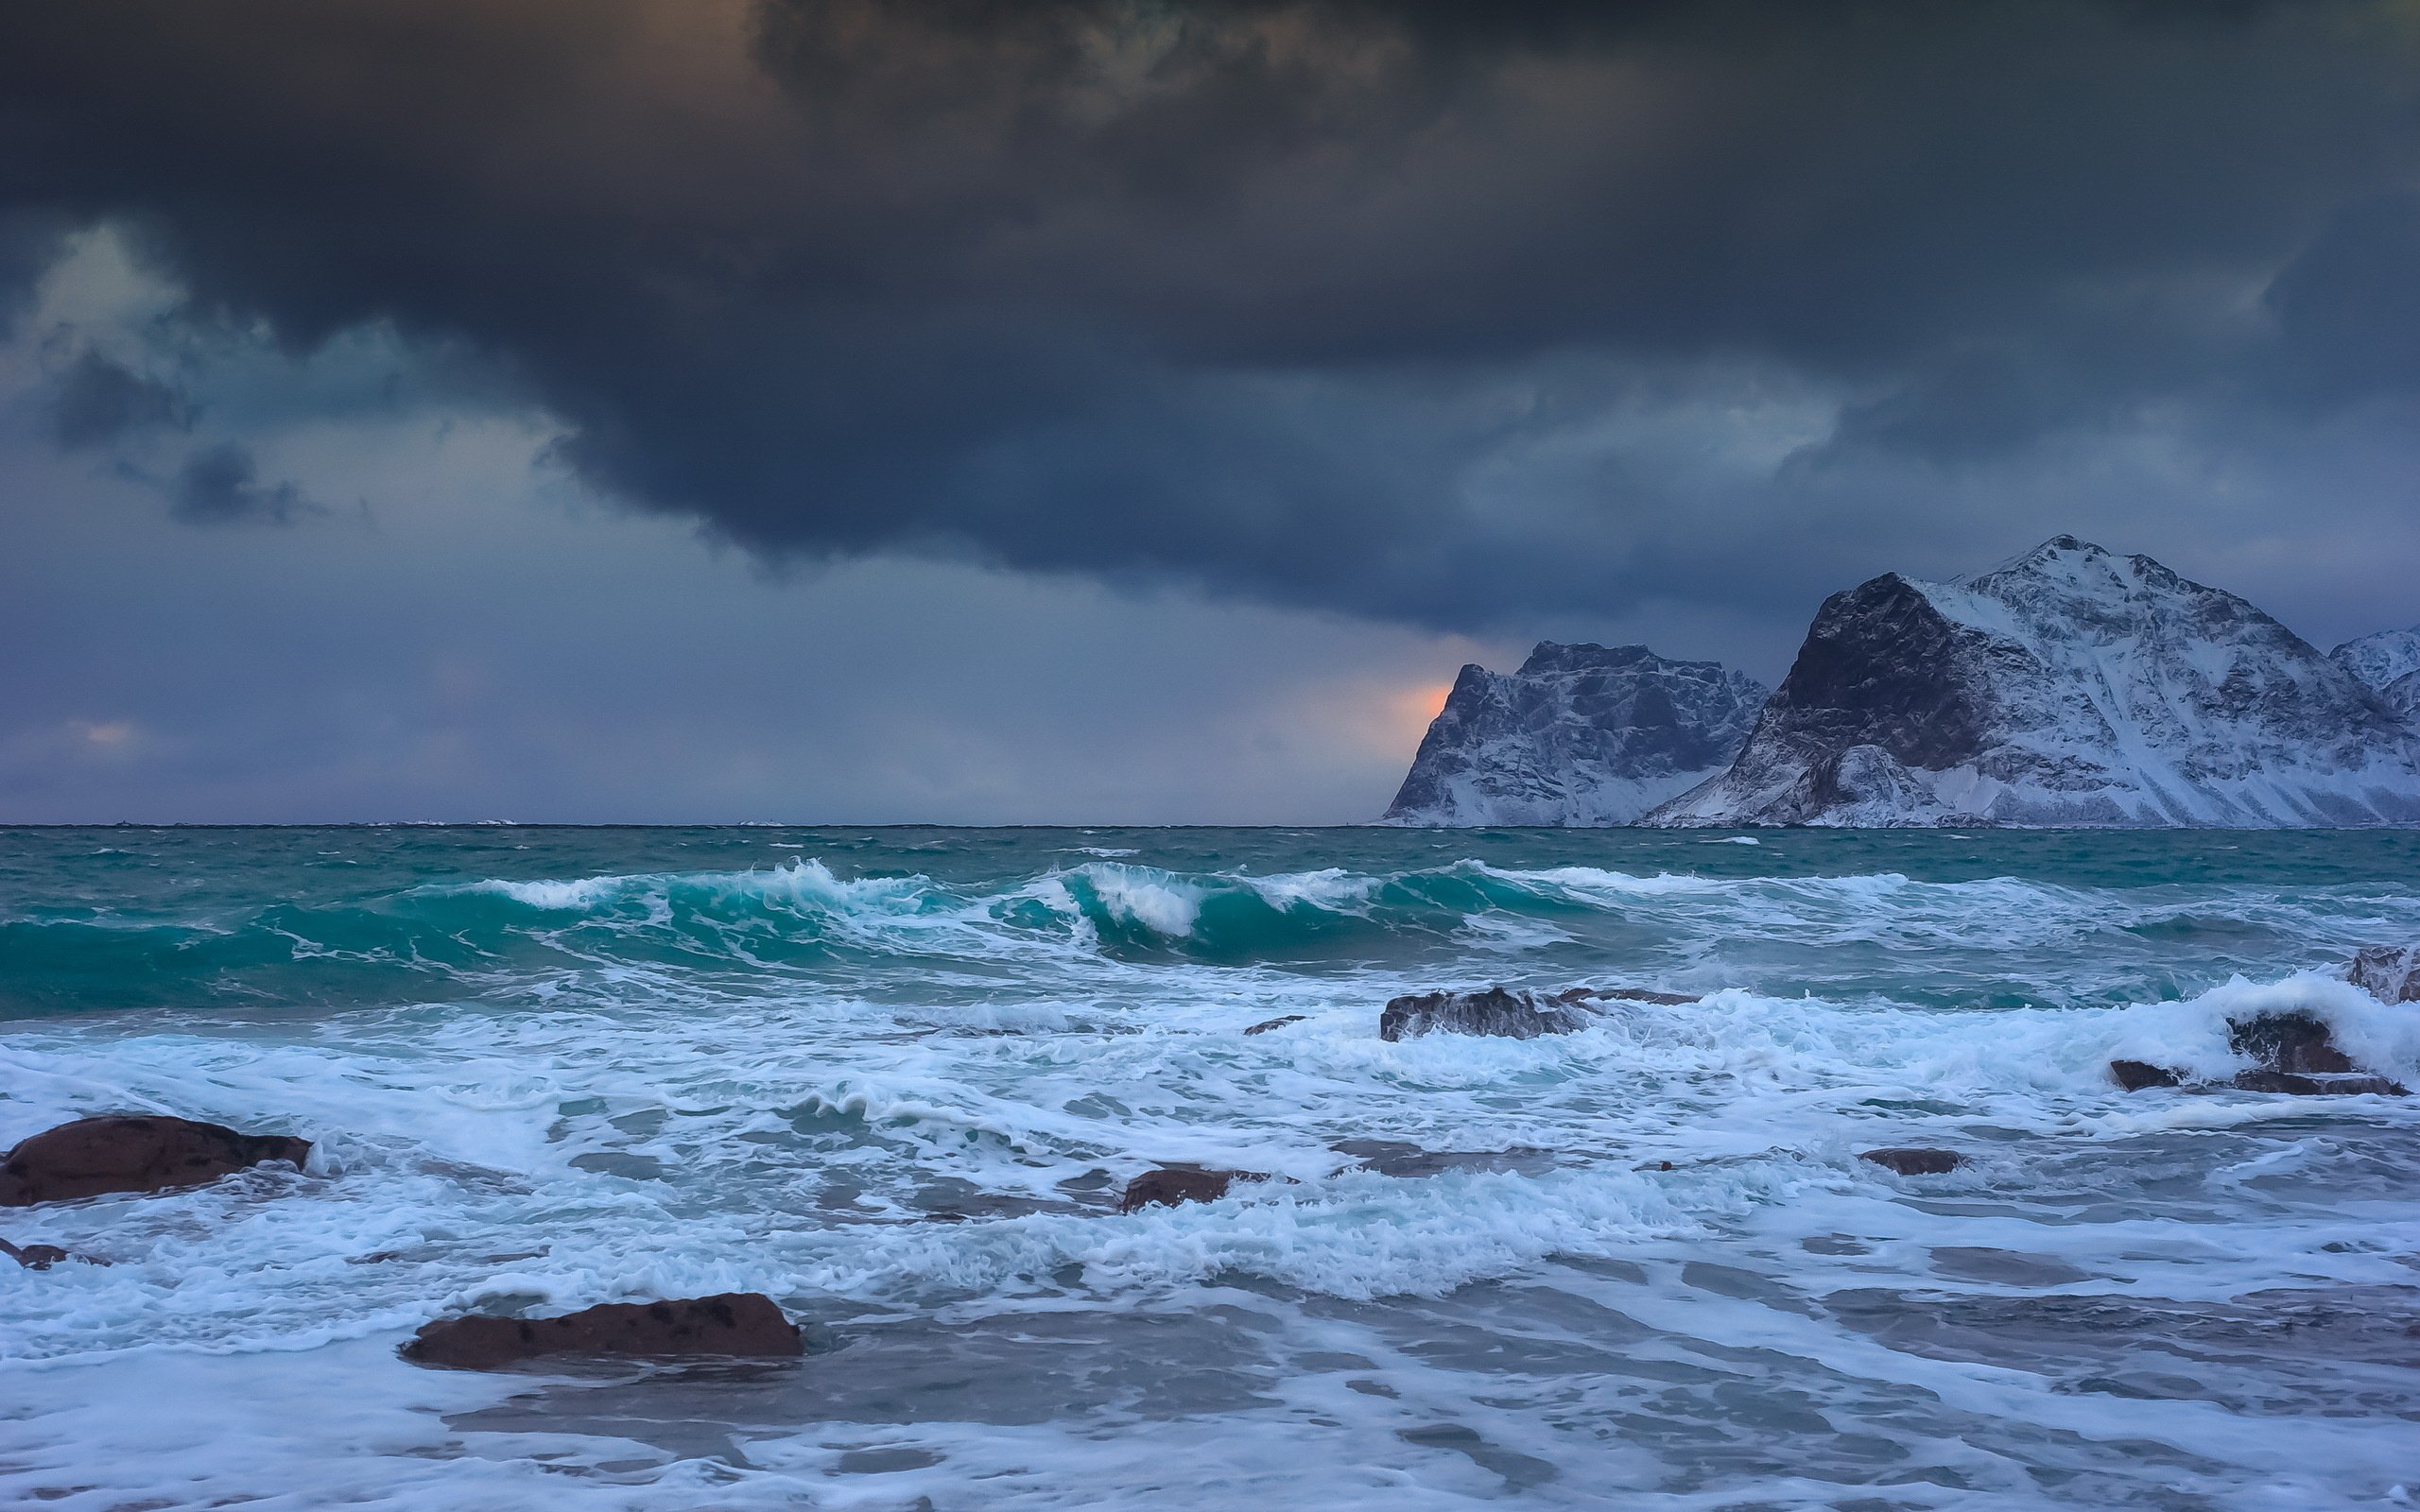 Океан шторм 2. Бискайский залив шторм. Берингово море шторм. Исландия Атлантический океан берег шторм. Карибское море Атлантический океан.